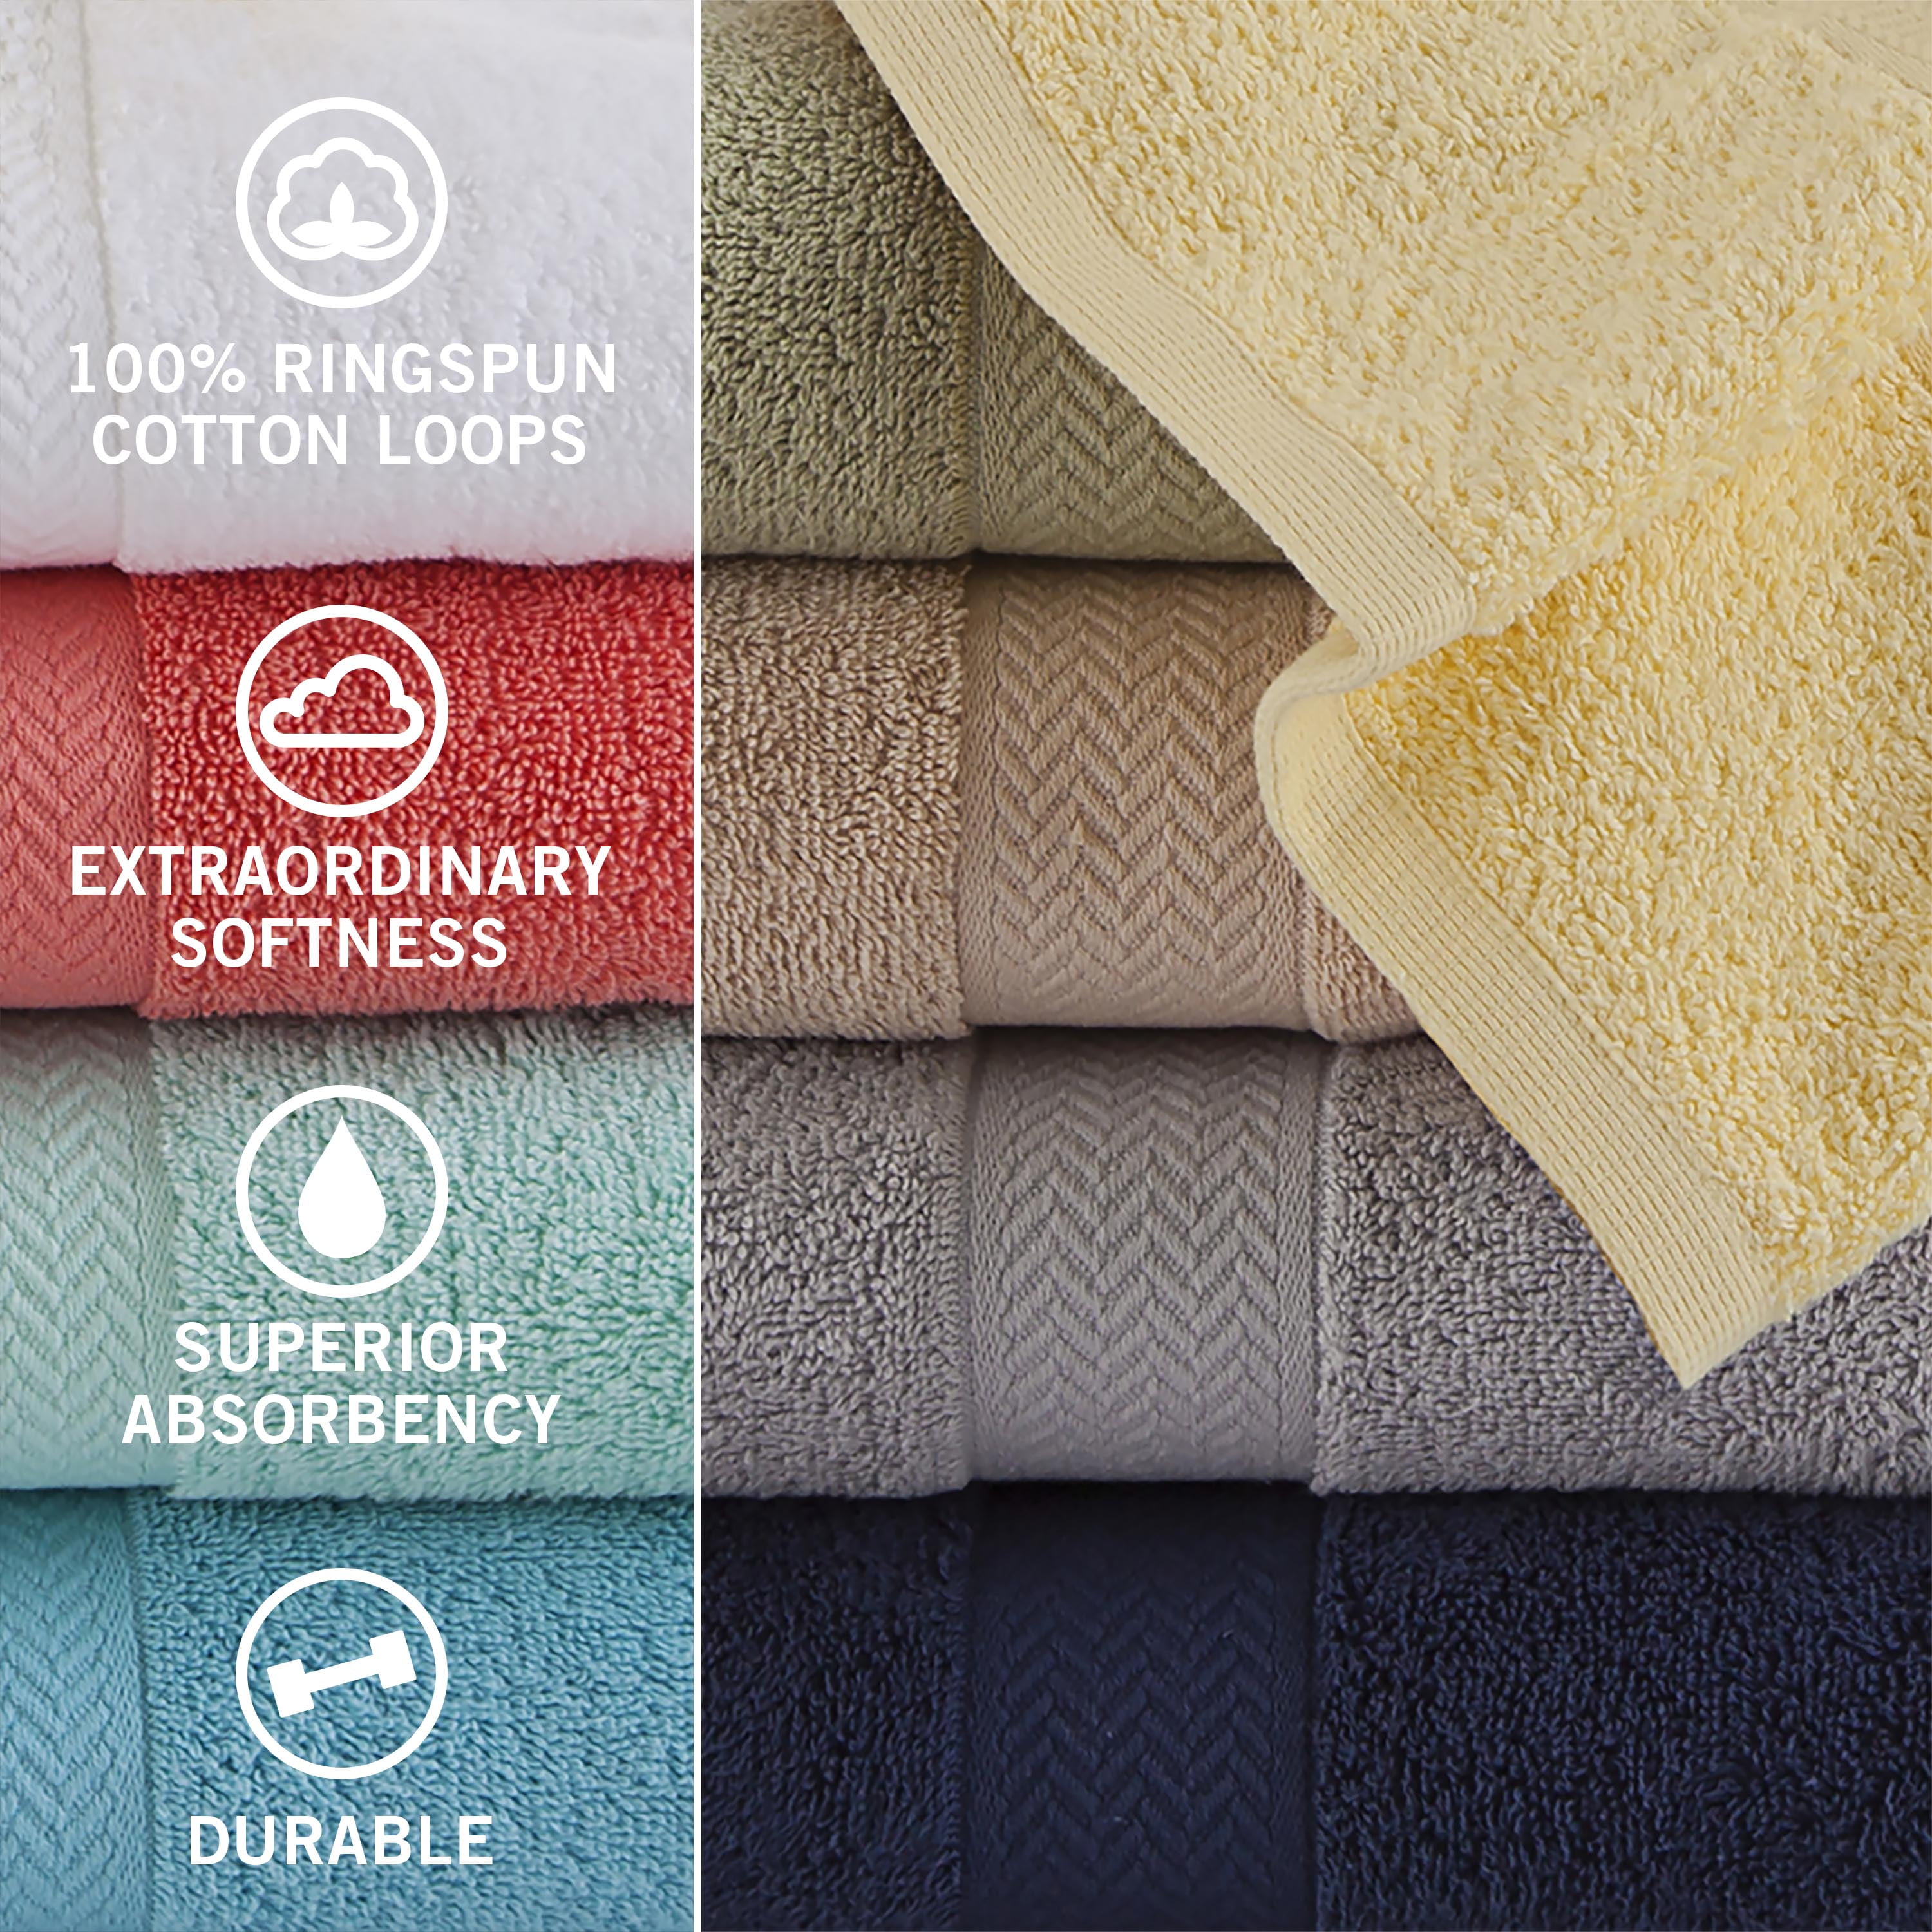 Cotton 2-pack Bath Towel by Clean Design Home® x Martex®